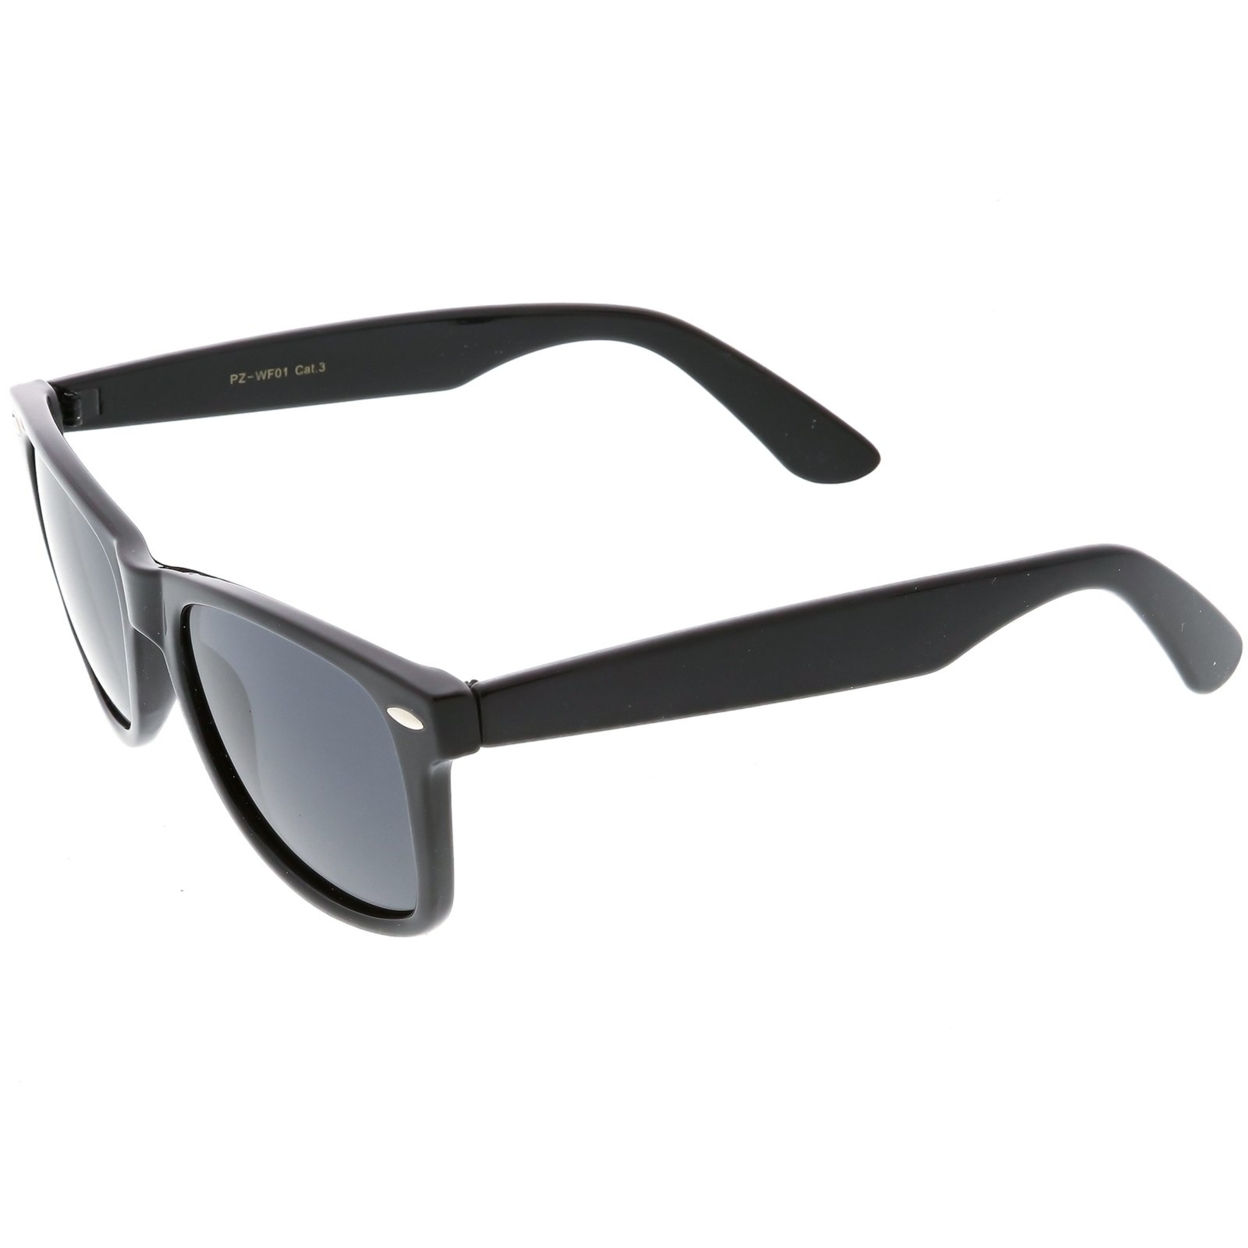 Classic Horn Rimmed Sunglasses Neutral Color Polarized Lens 52mm - Tortoise / Brown